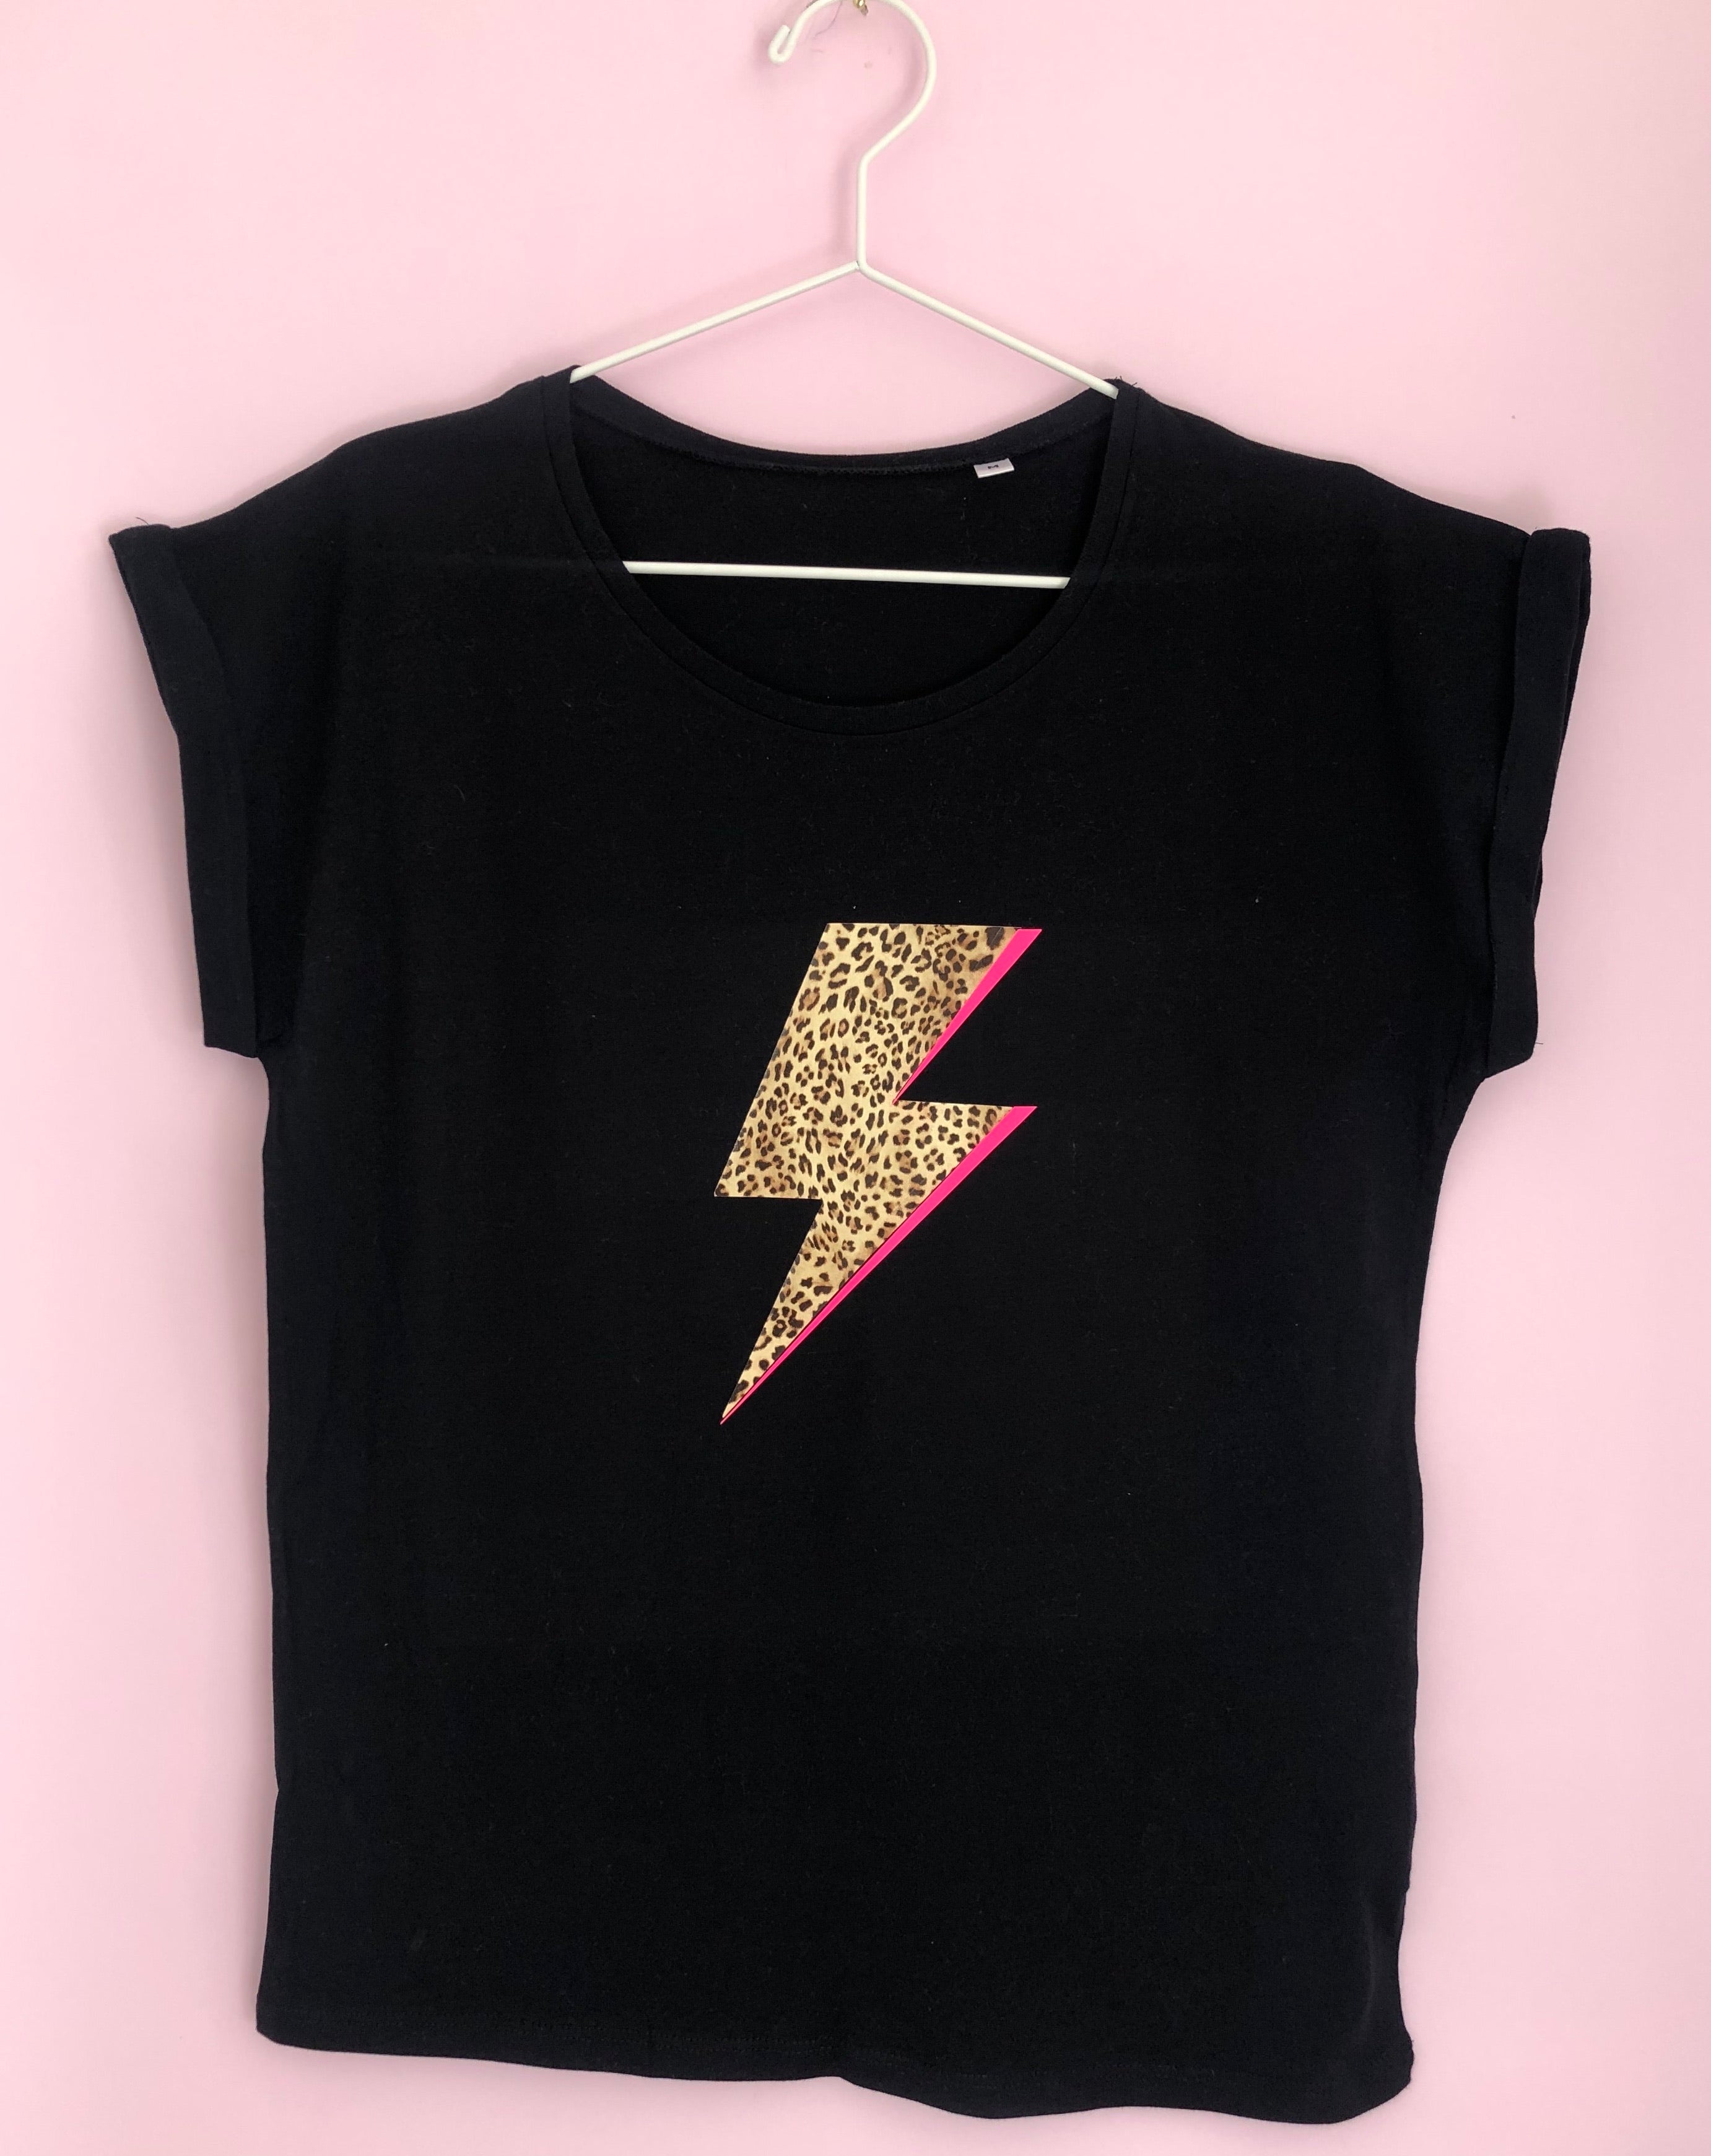 LEOPARD BOLT FLASH t shirt – Neon Marl